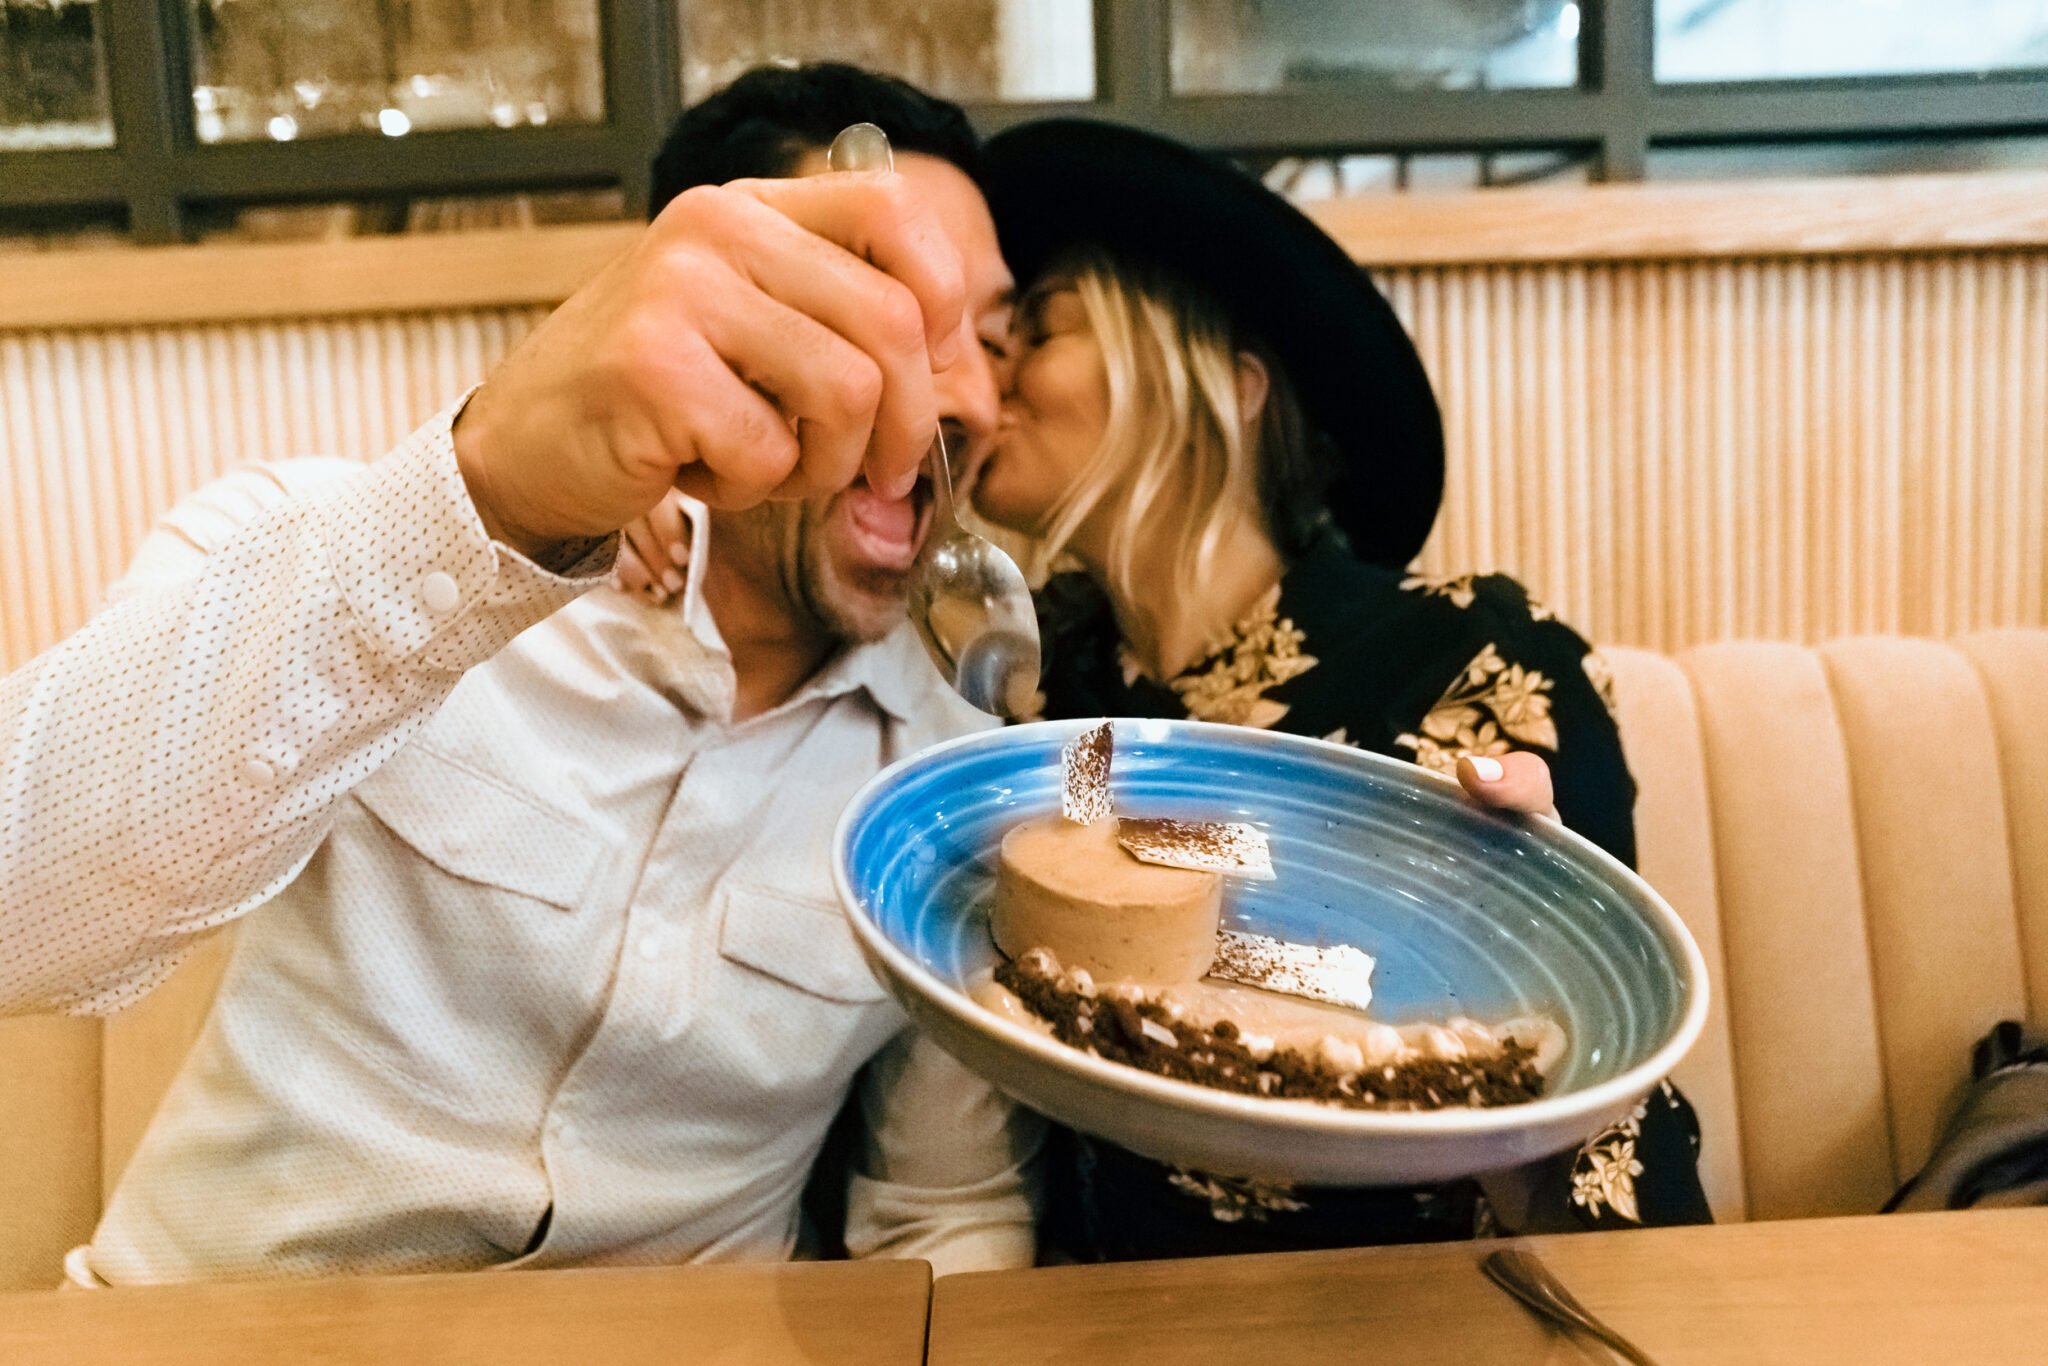 couple sharing dessert on date night